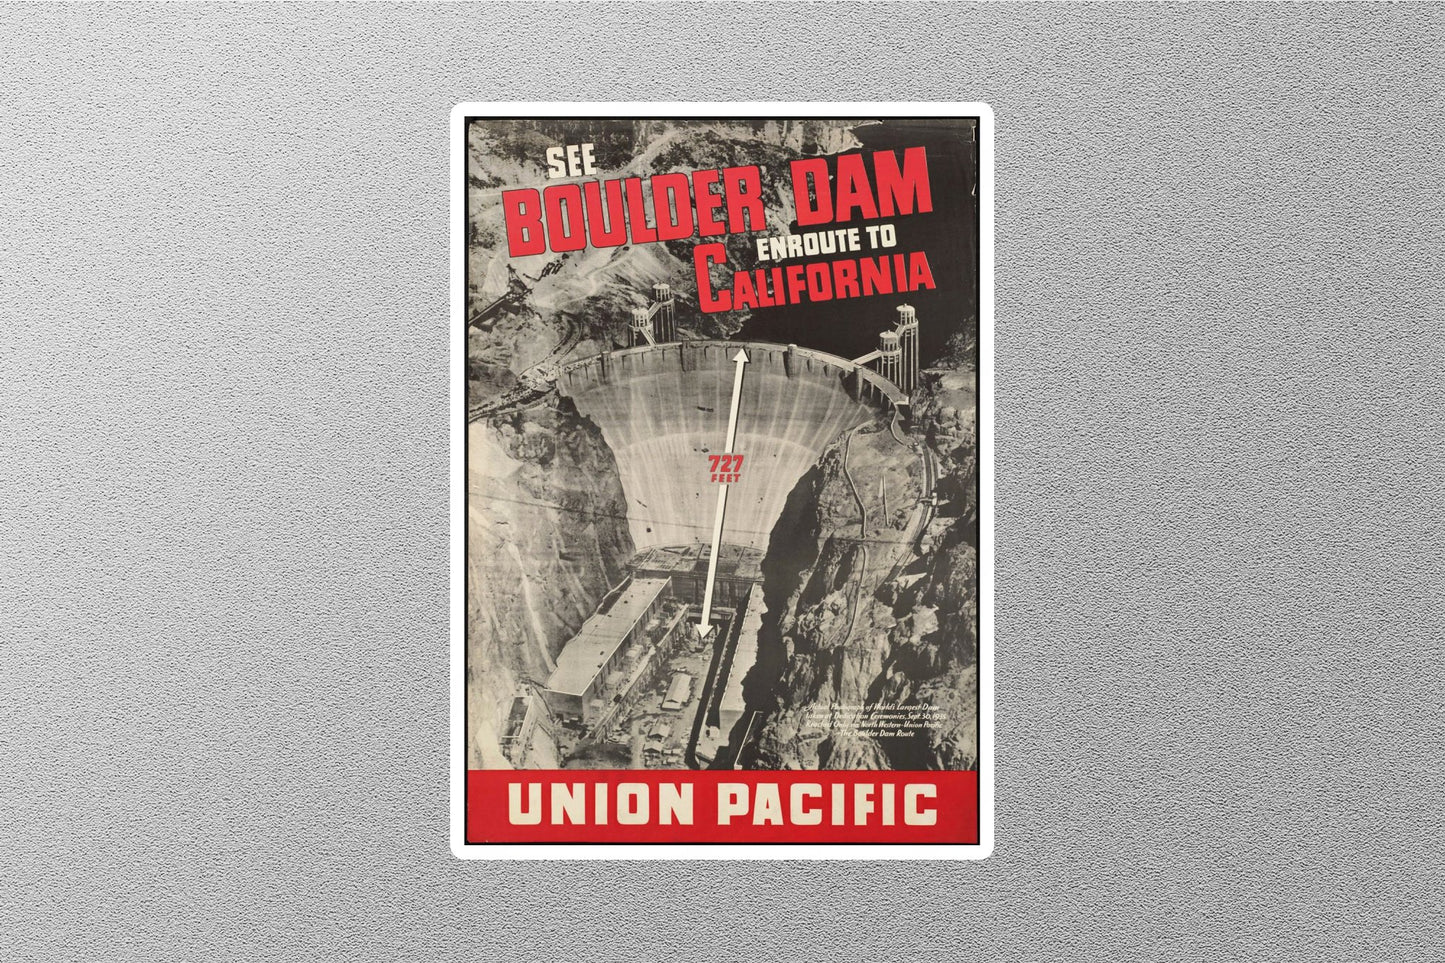 Vintage California Travel Sticker